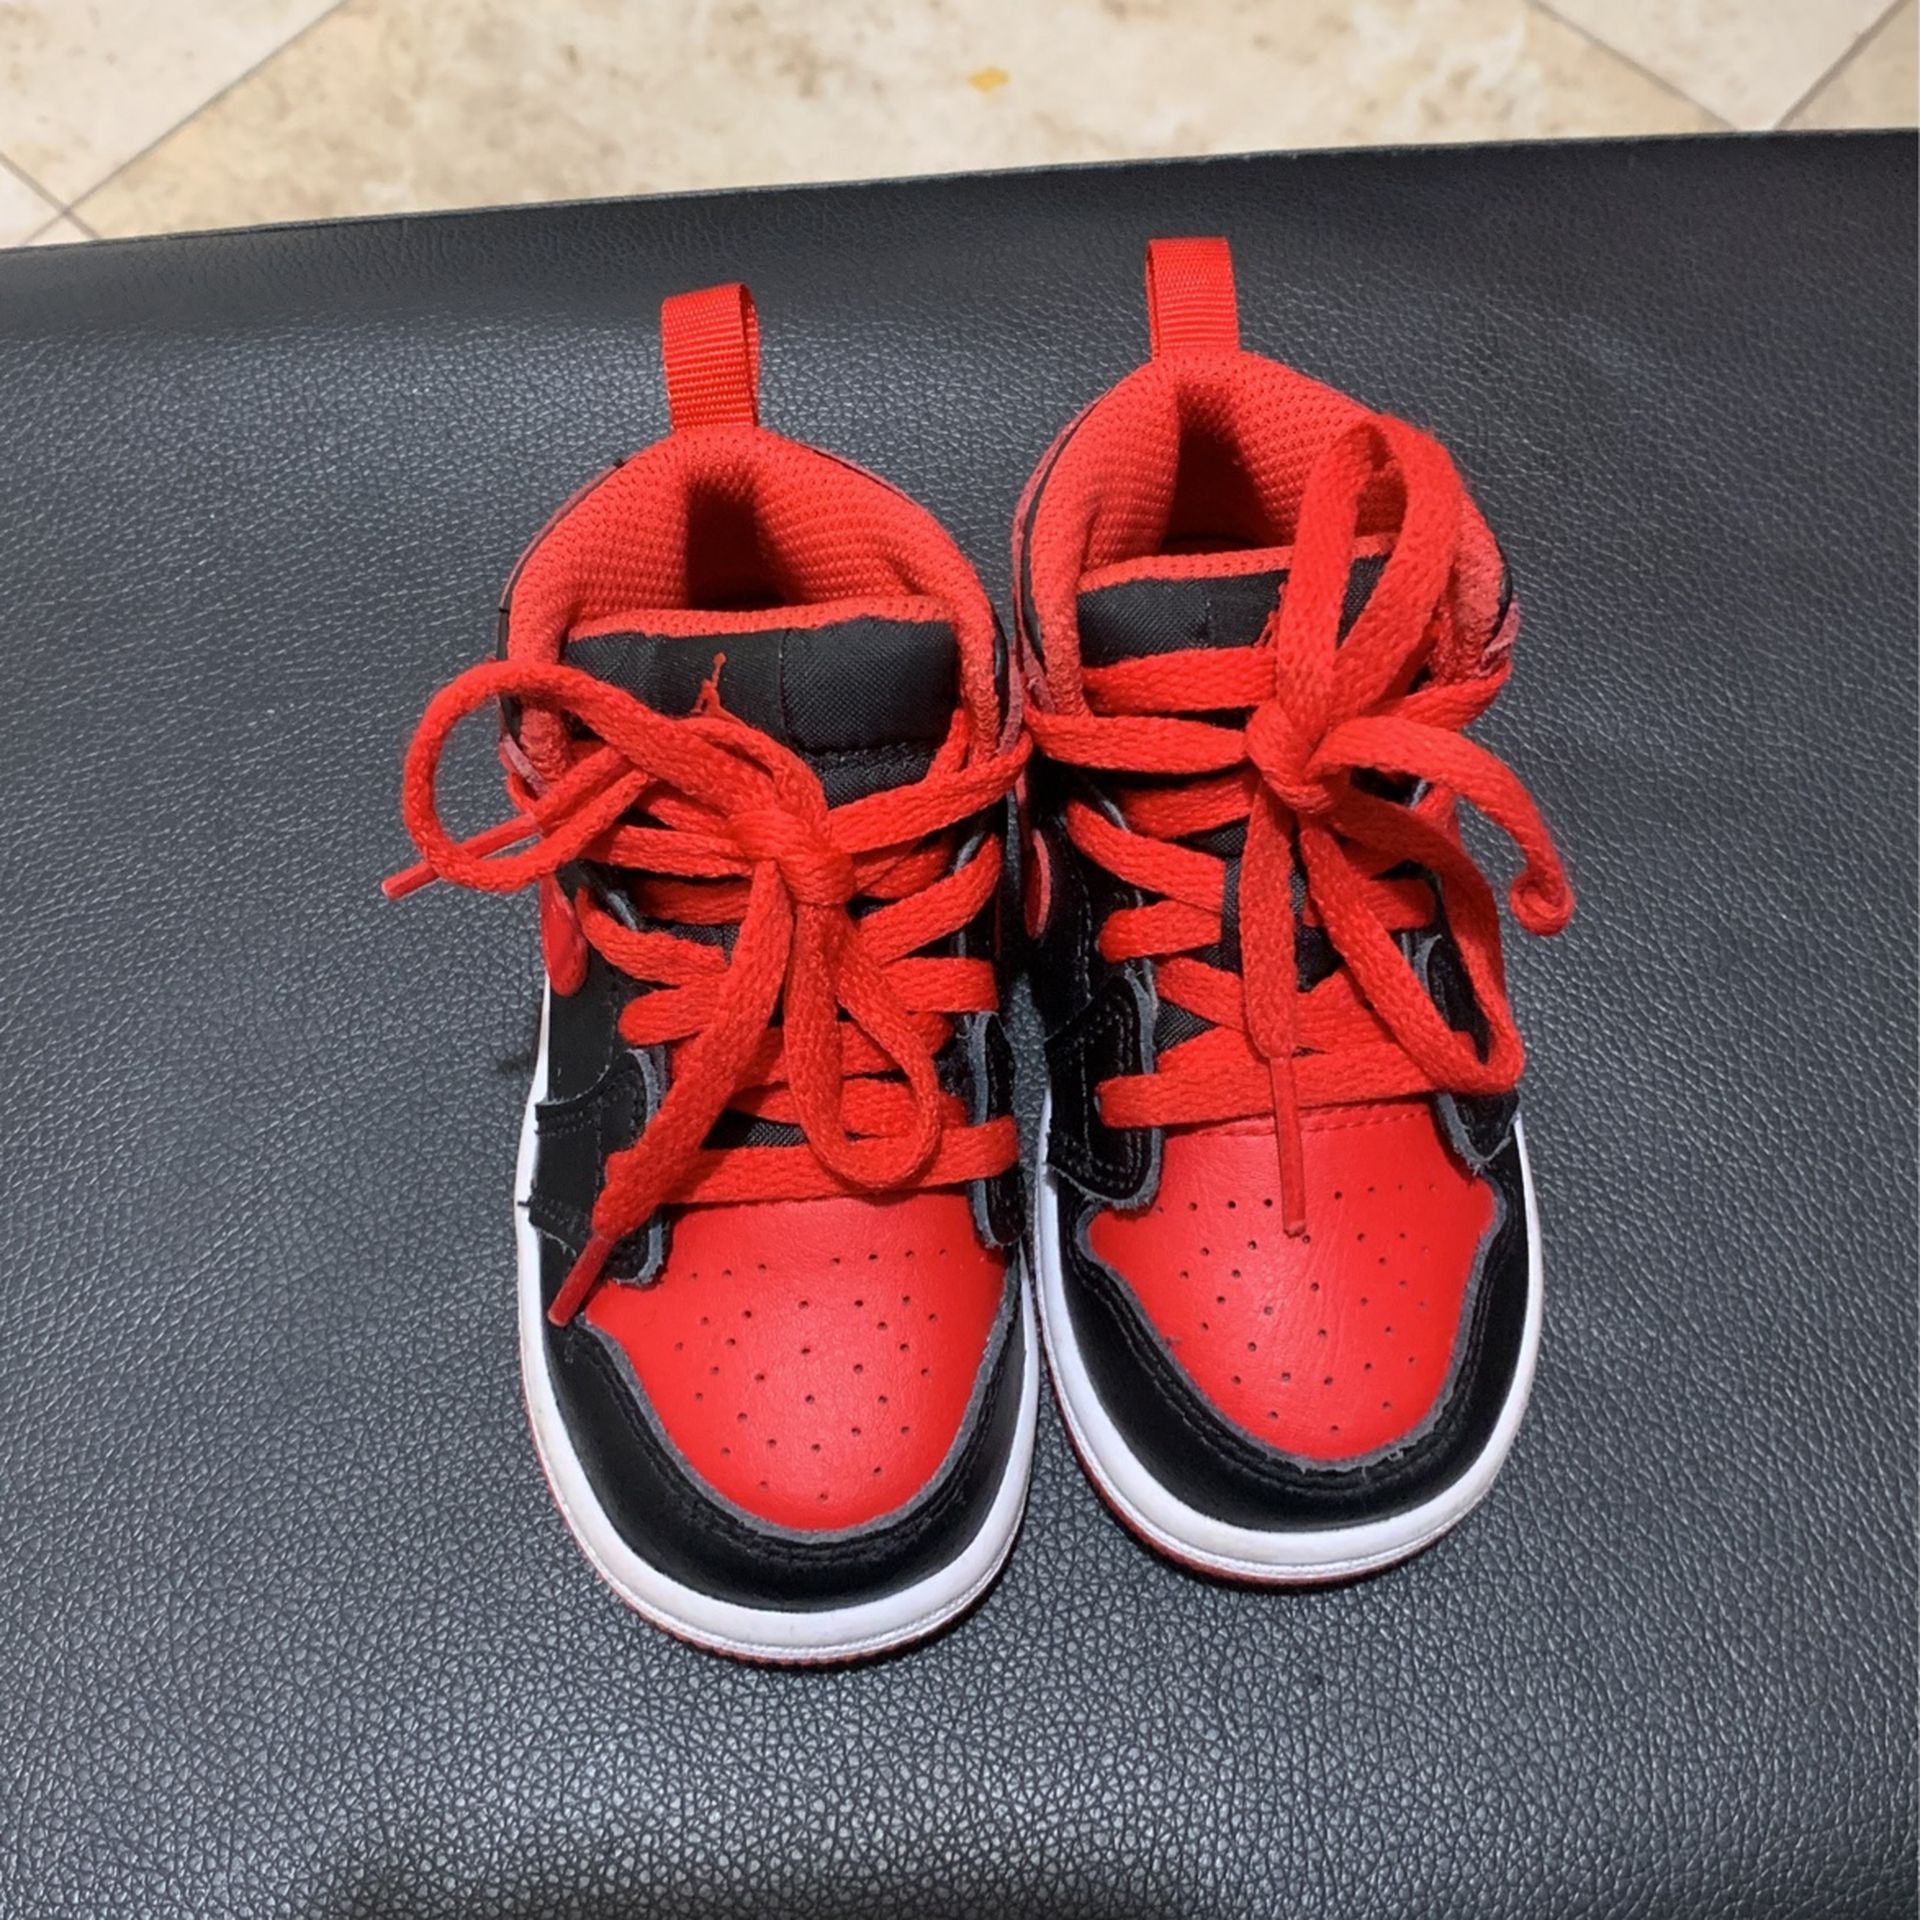 Air Jordan 1s, Size 6c